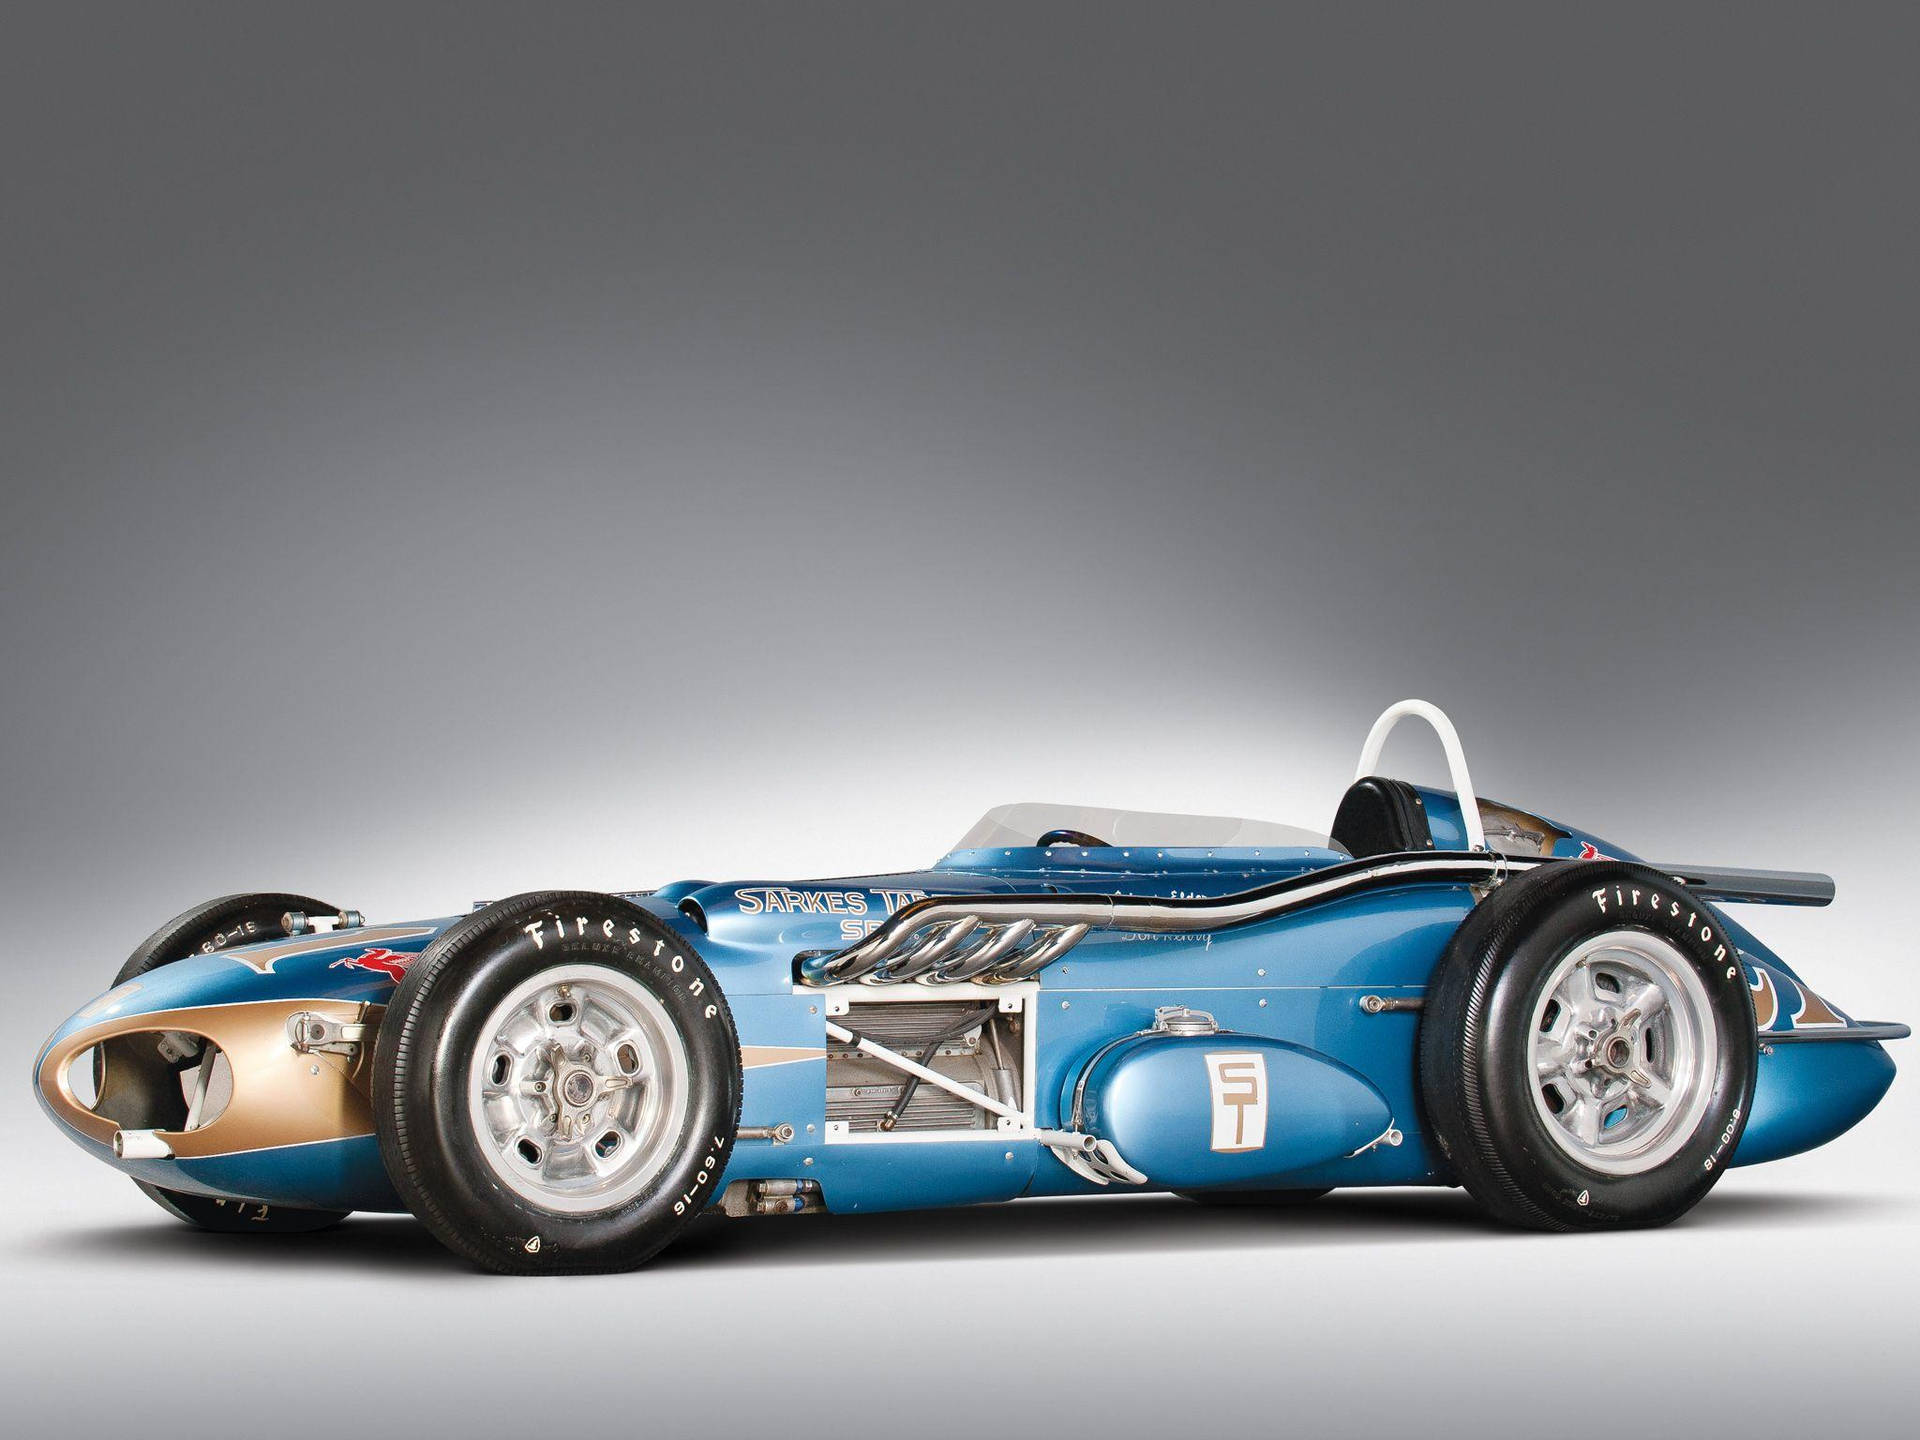 Classic Indianapolis 500 Blue Car Wallpaper